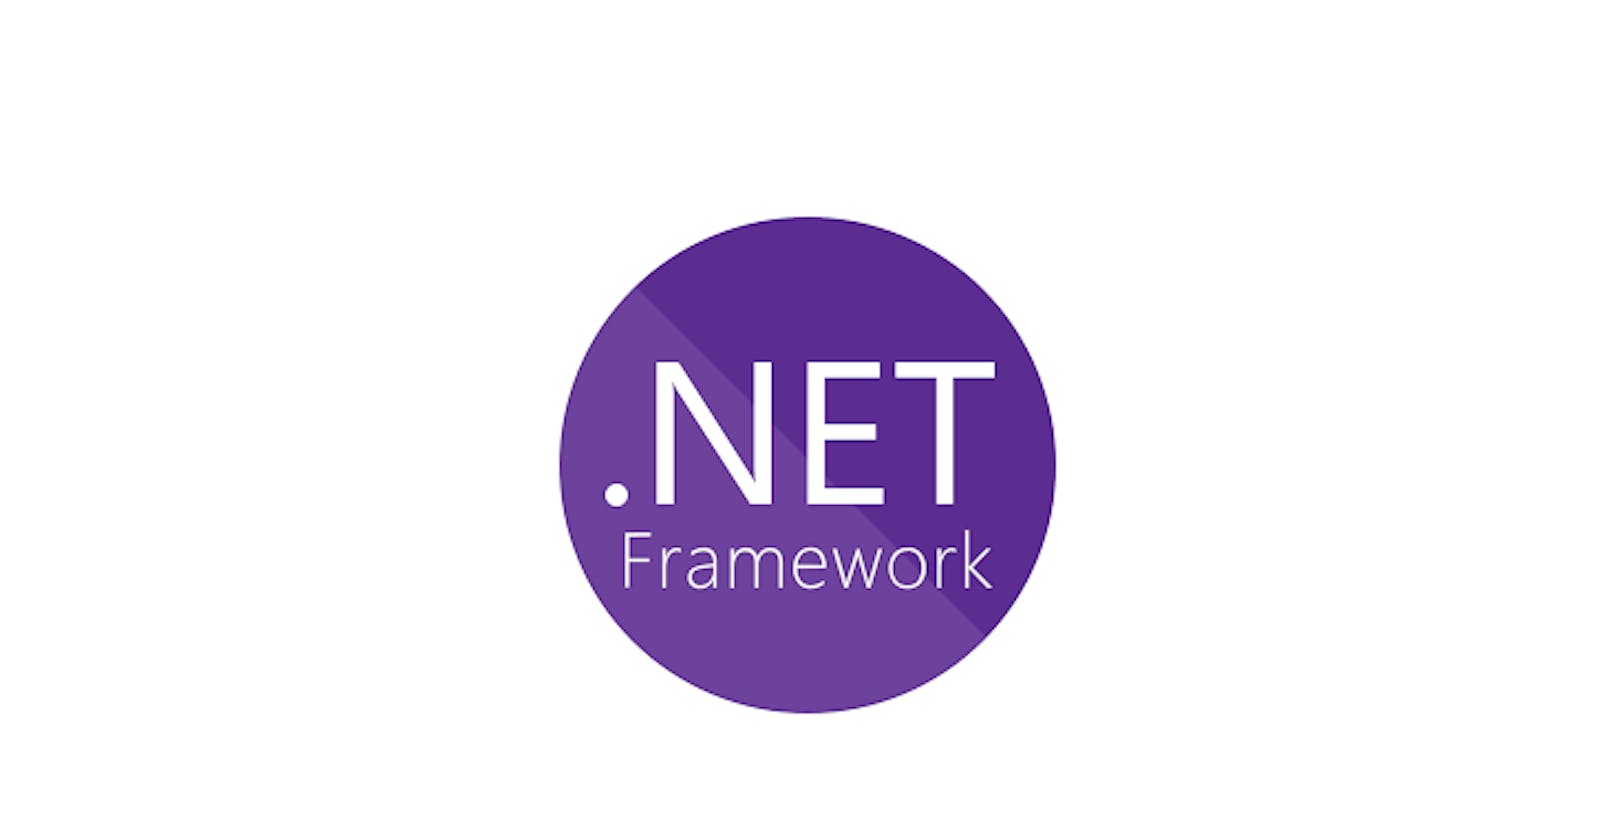 The power of .NET Framework: An Overview of its Benefits